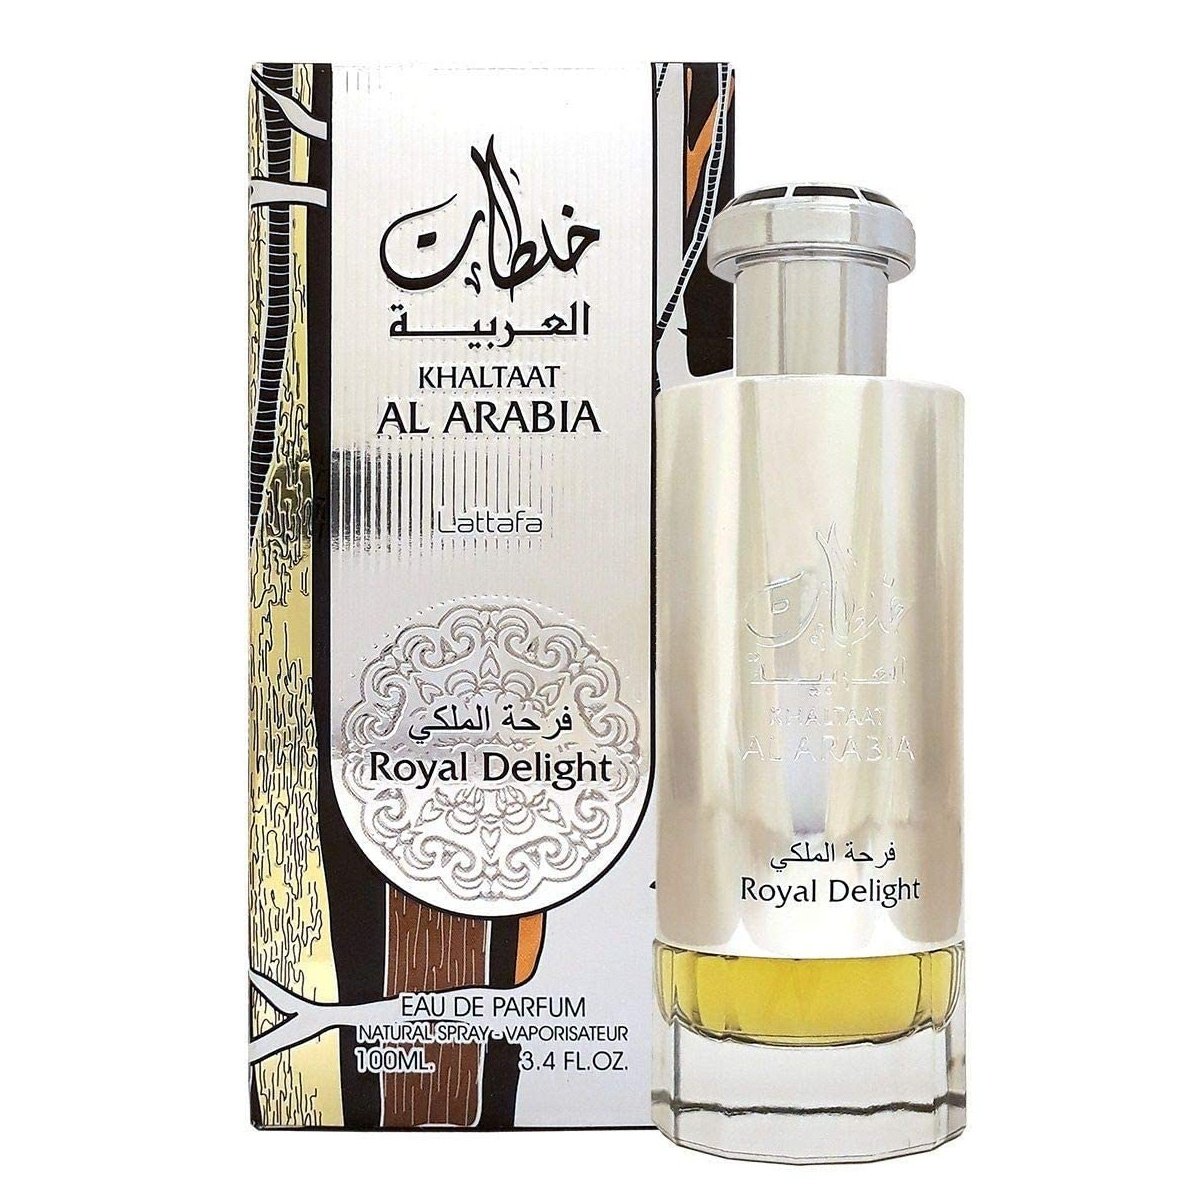 Khaltaat Al Arabia Royal Delight